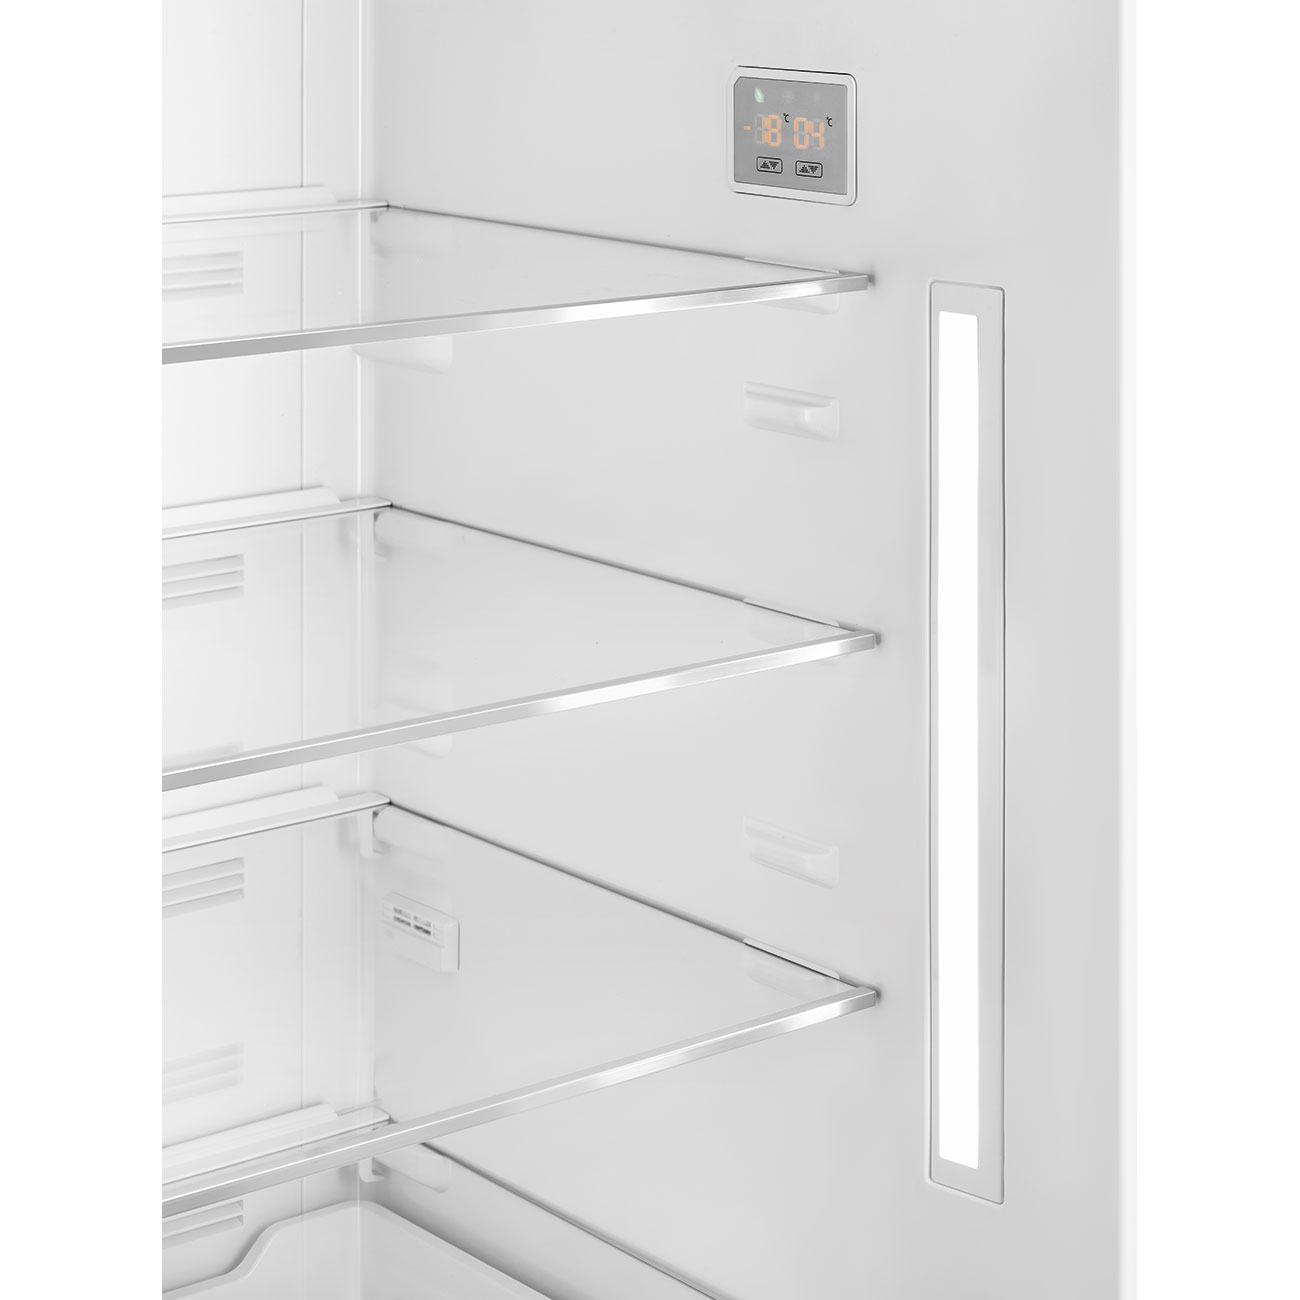 Bottom Mount Free standing refrigerator - Smeg_6